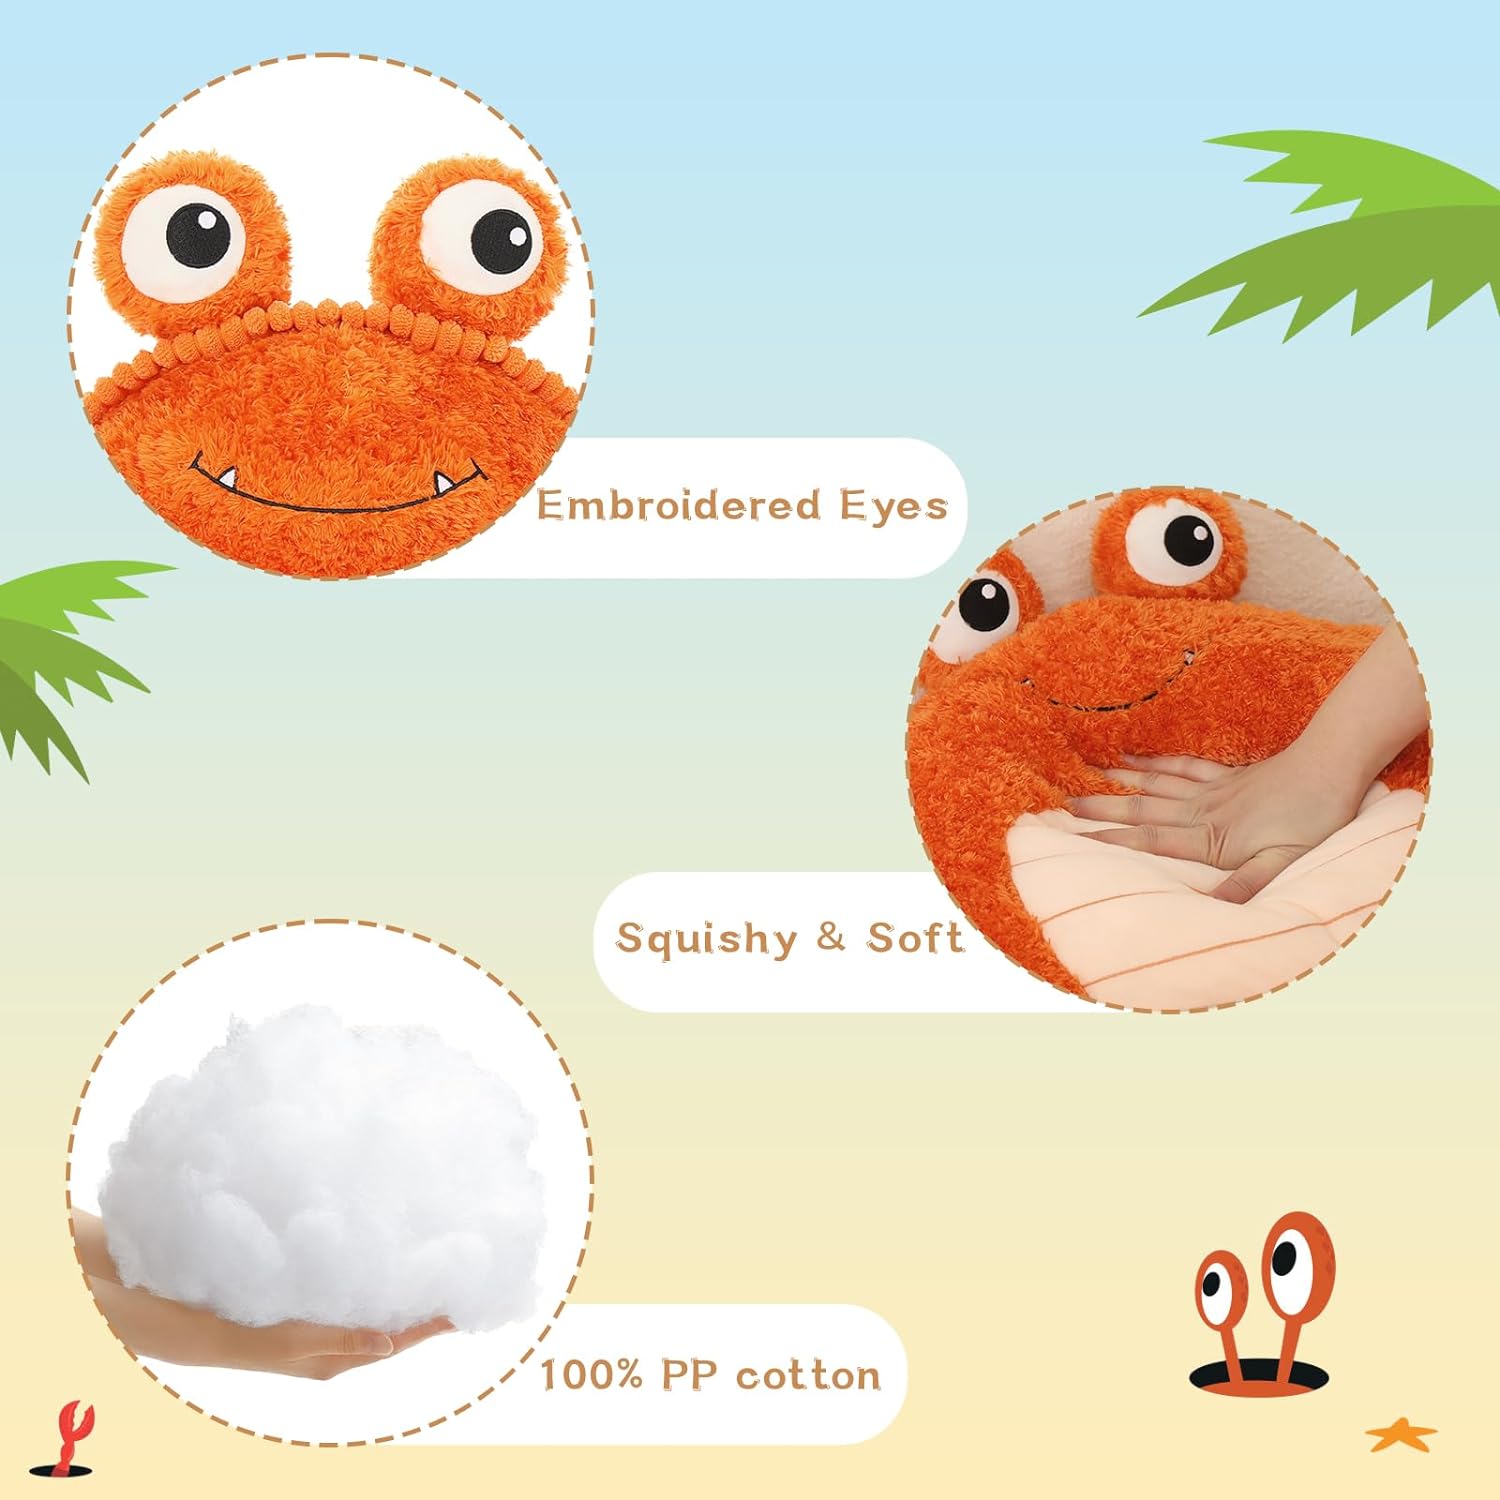 Crab Plush Toys Ocean Stuffed Animals, 32 Inches